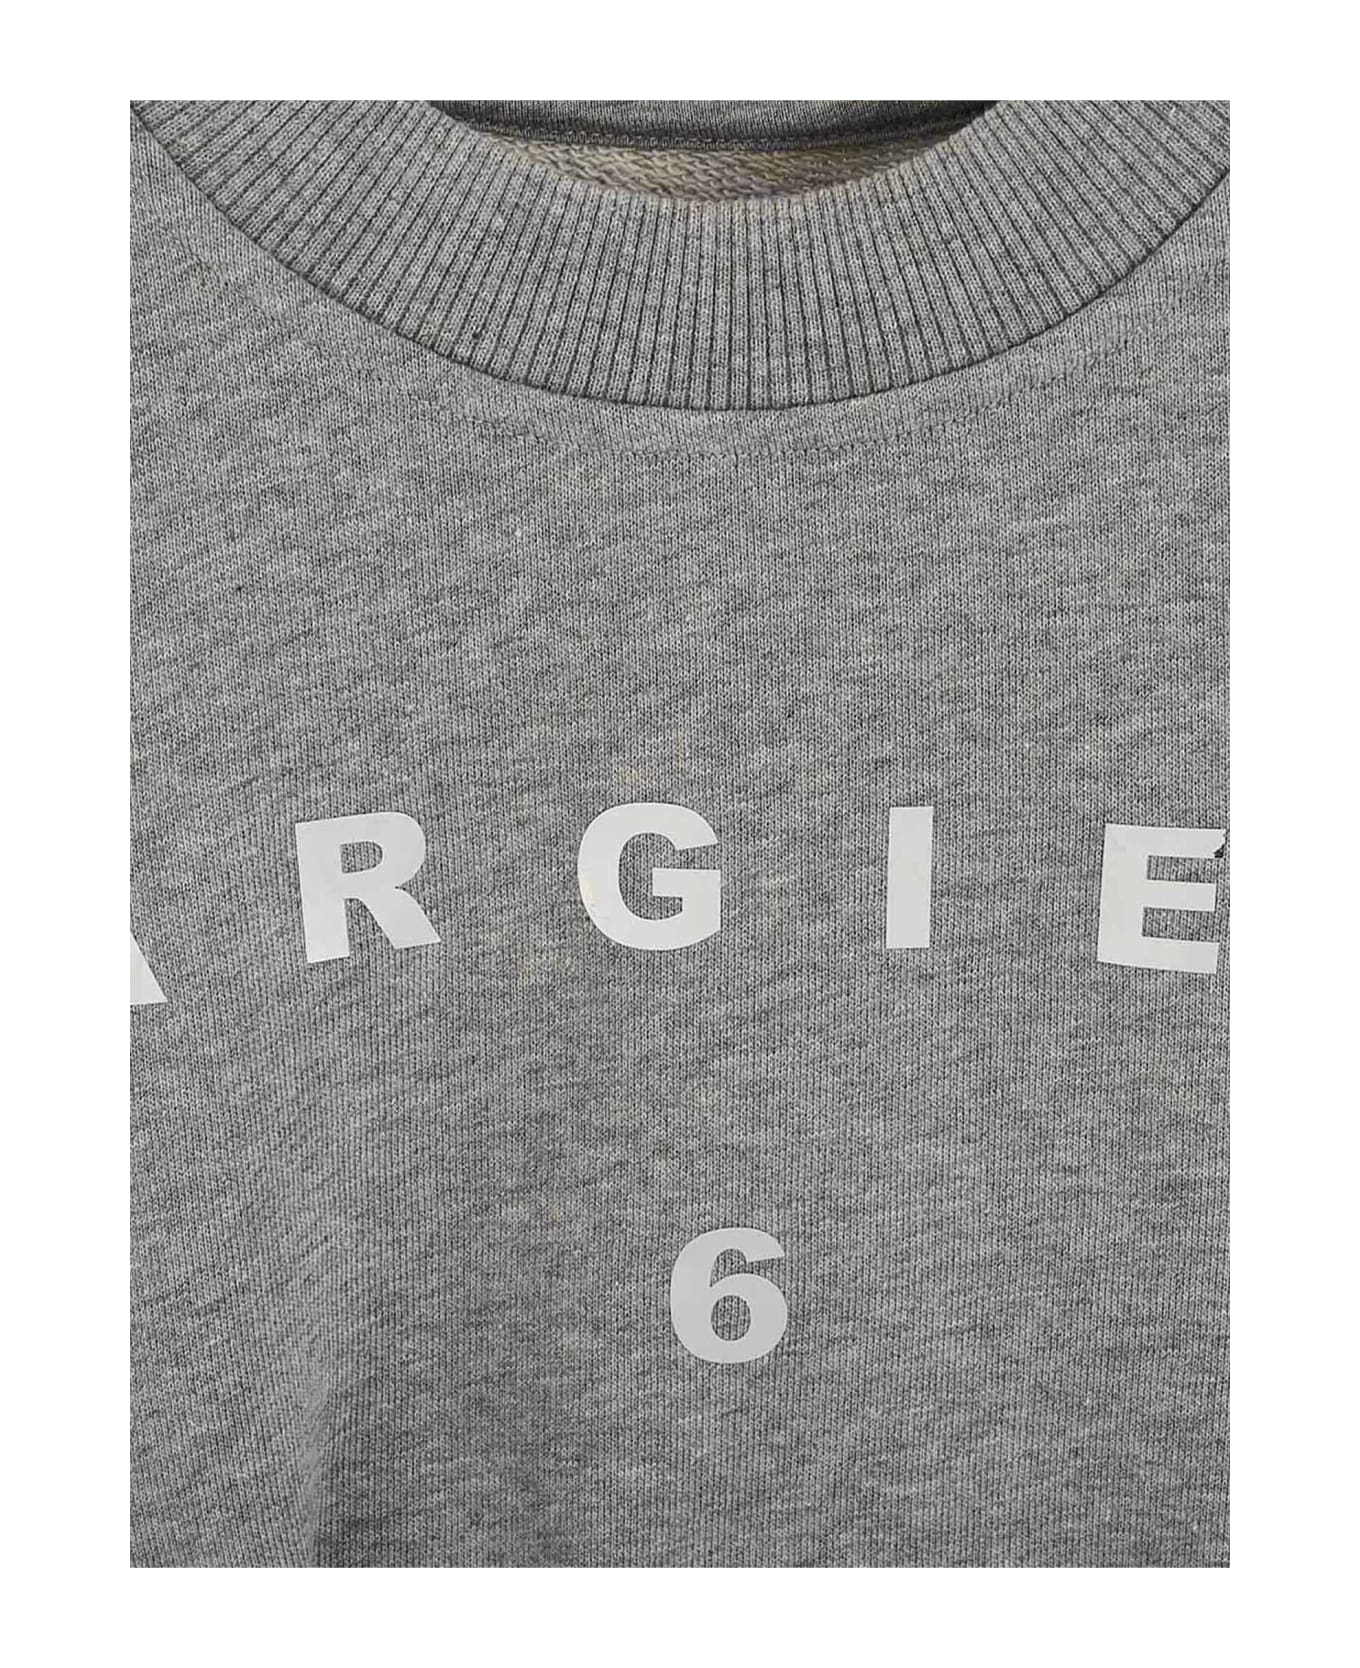 MM6 Maison Margiela Logo Sweatshirt - Gray